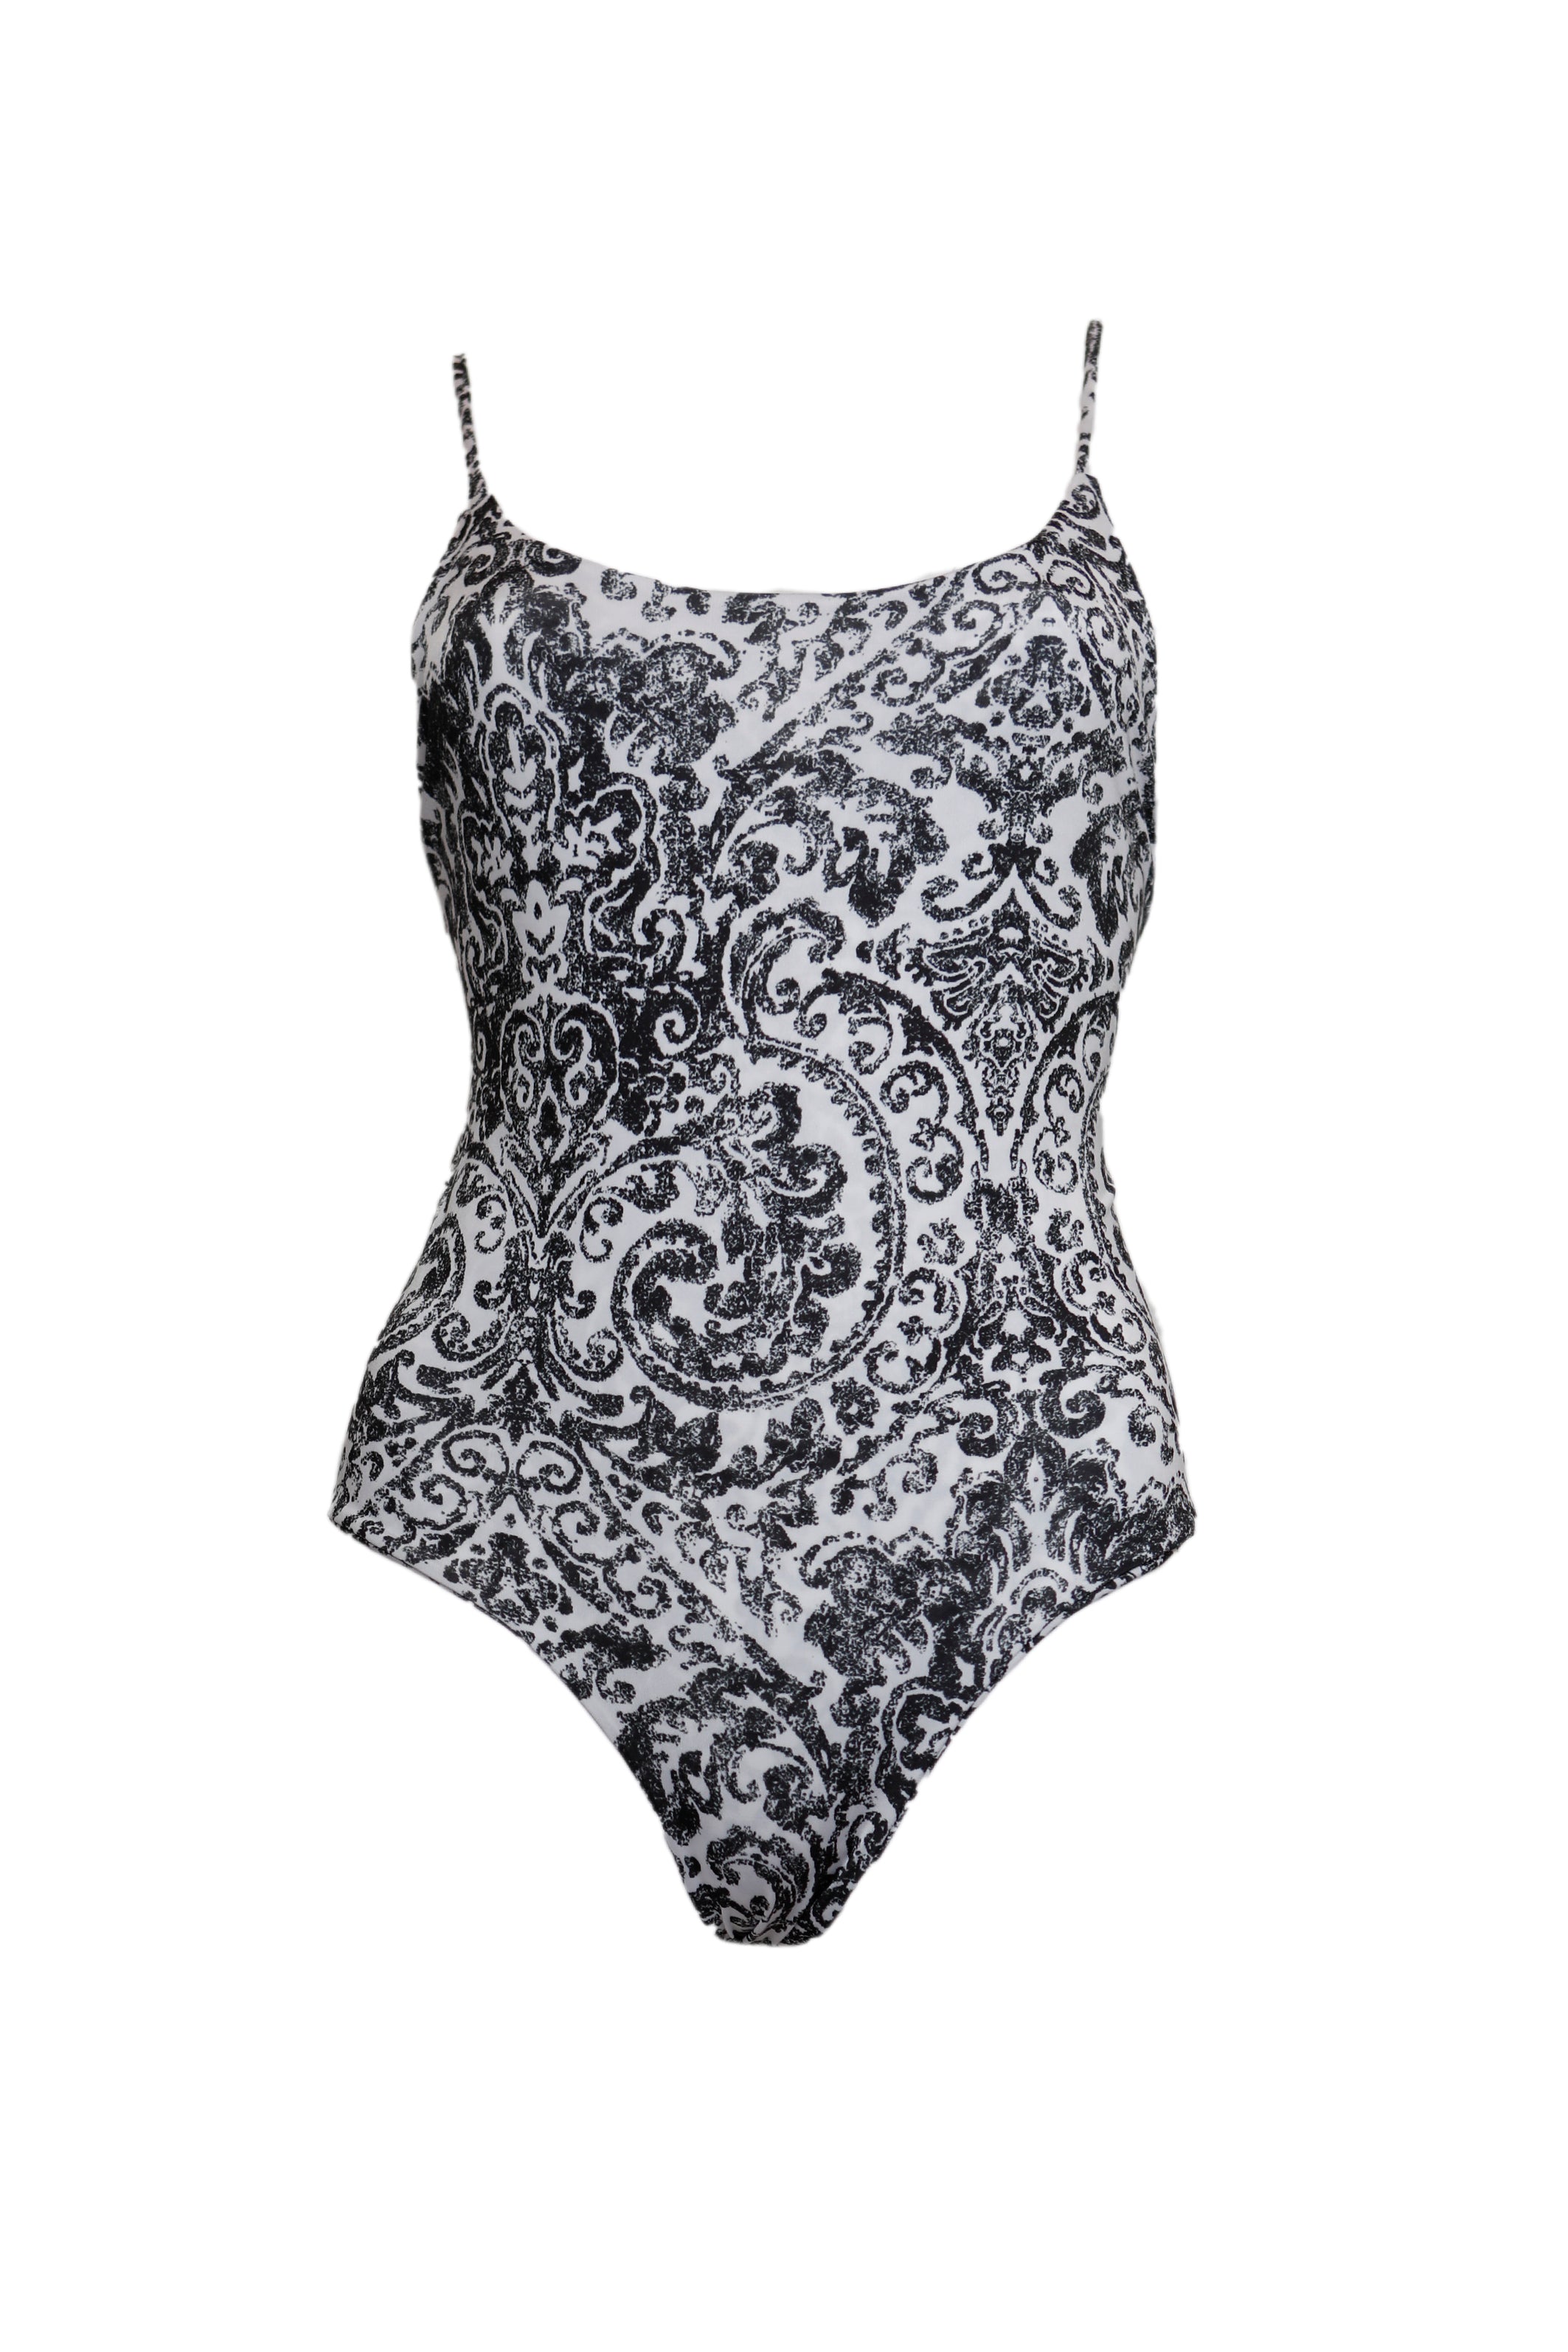 FEDERICA - one-piece swimsuit in Raja print lycra